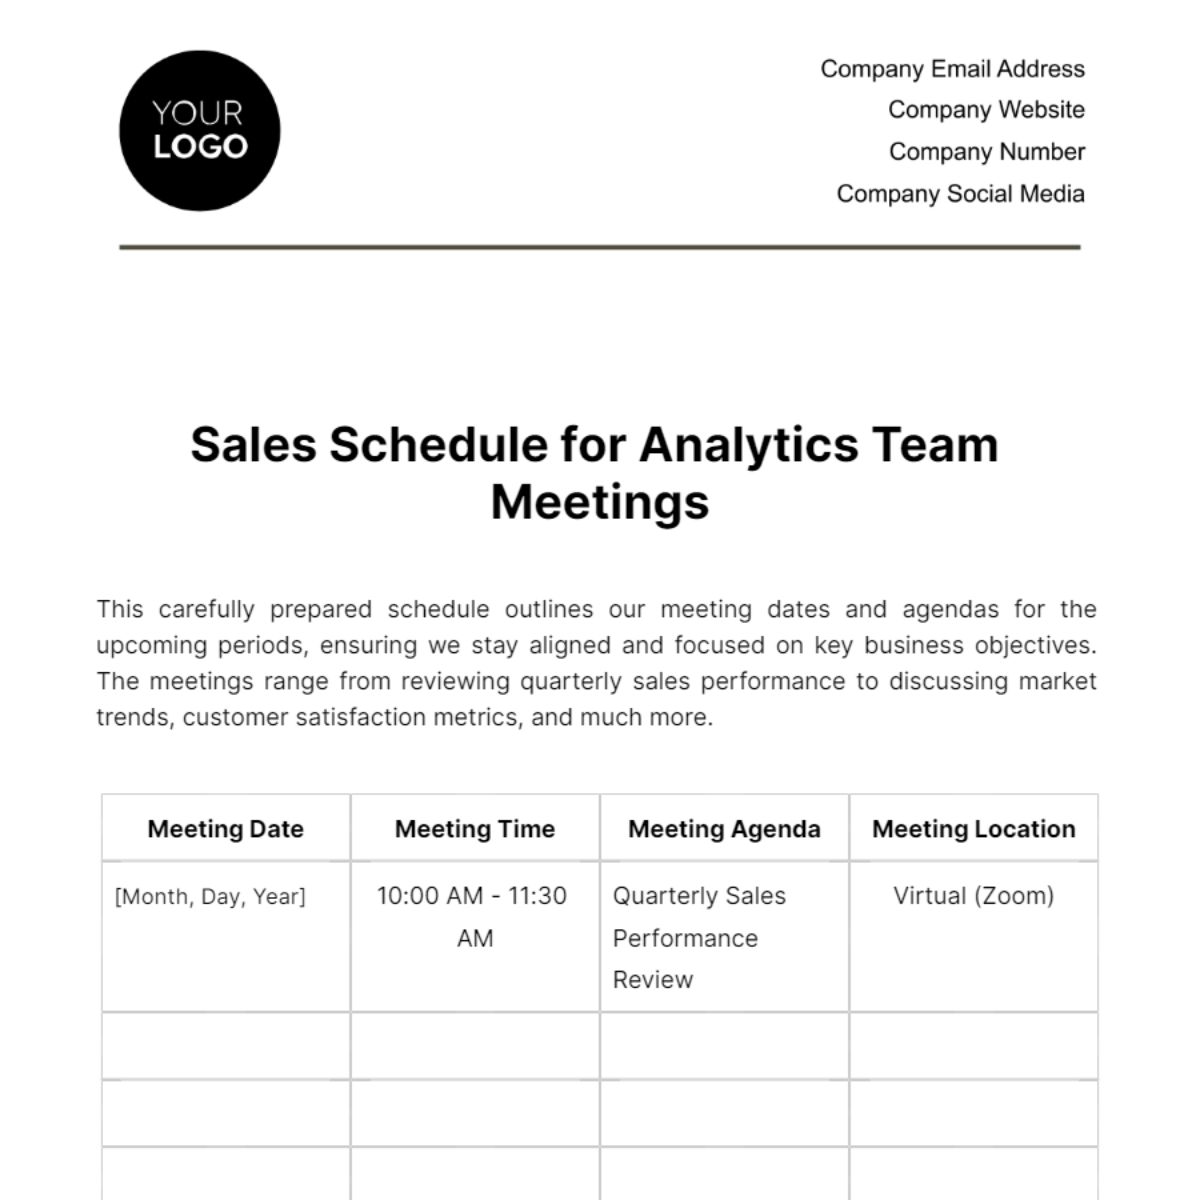 Free Sales Schedule for Analytics Team Meetings Template